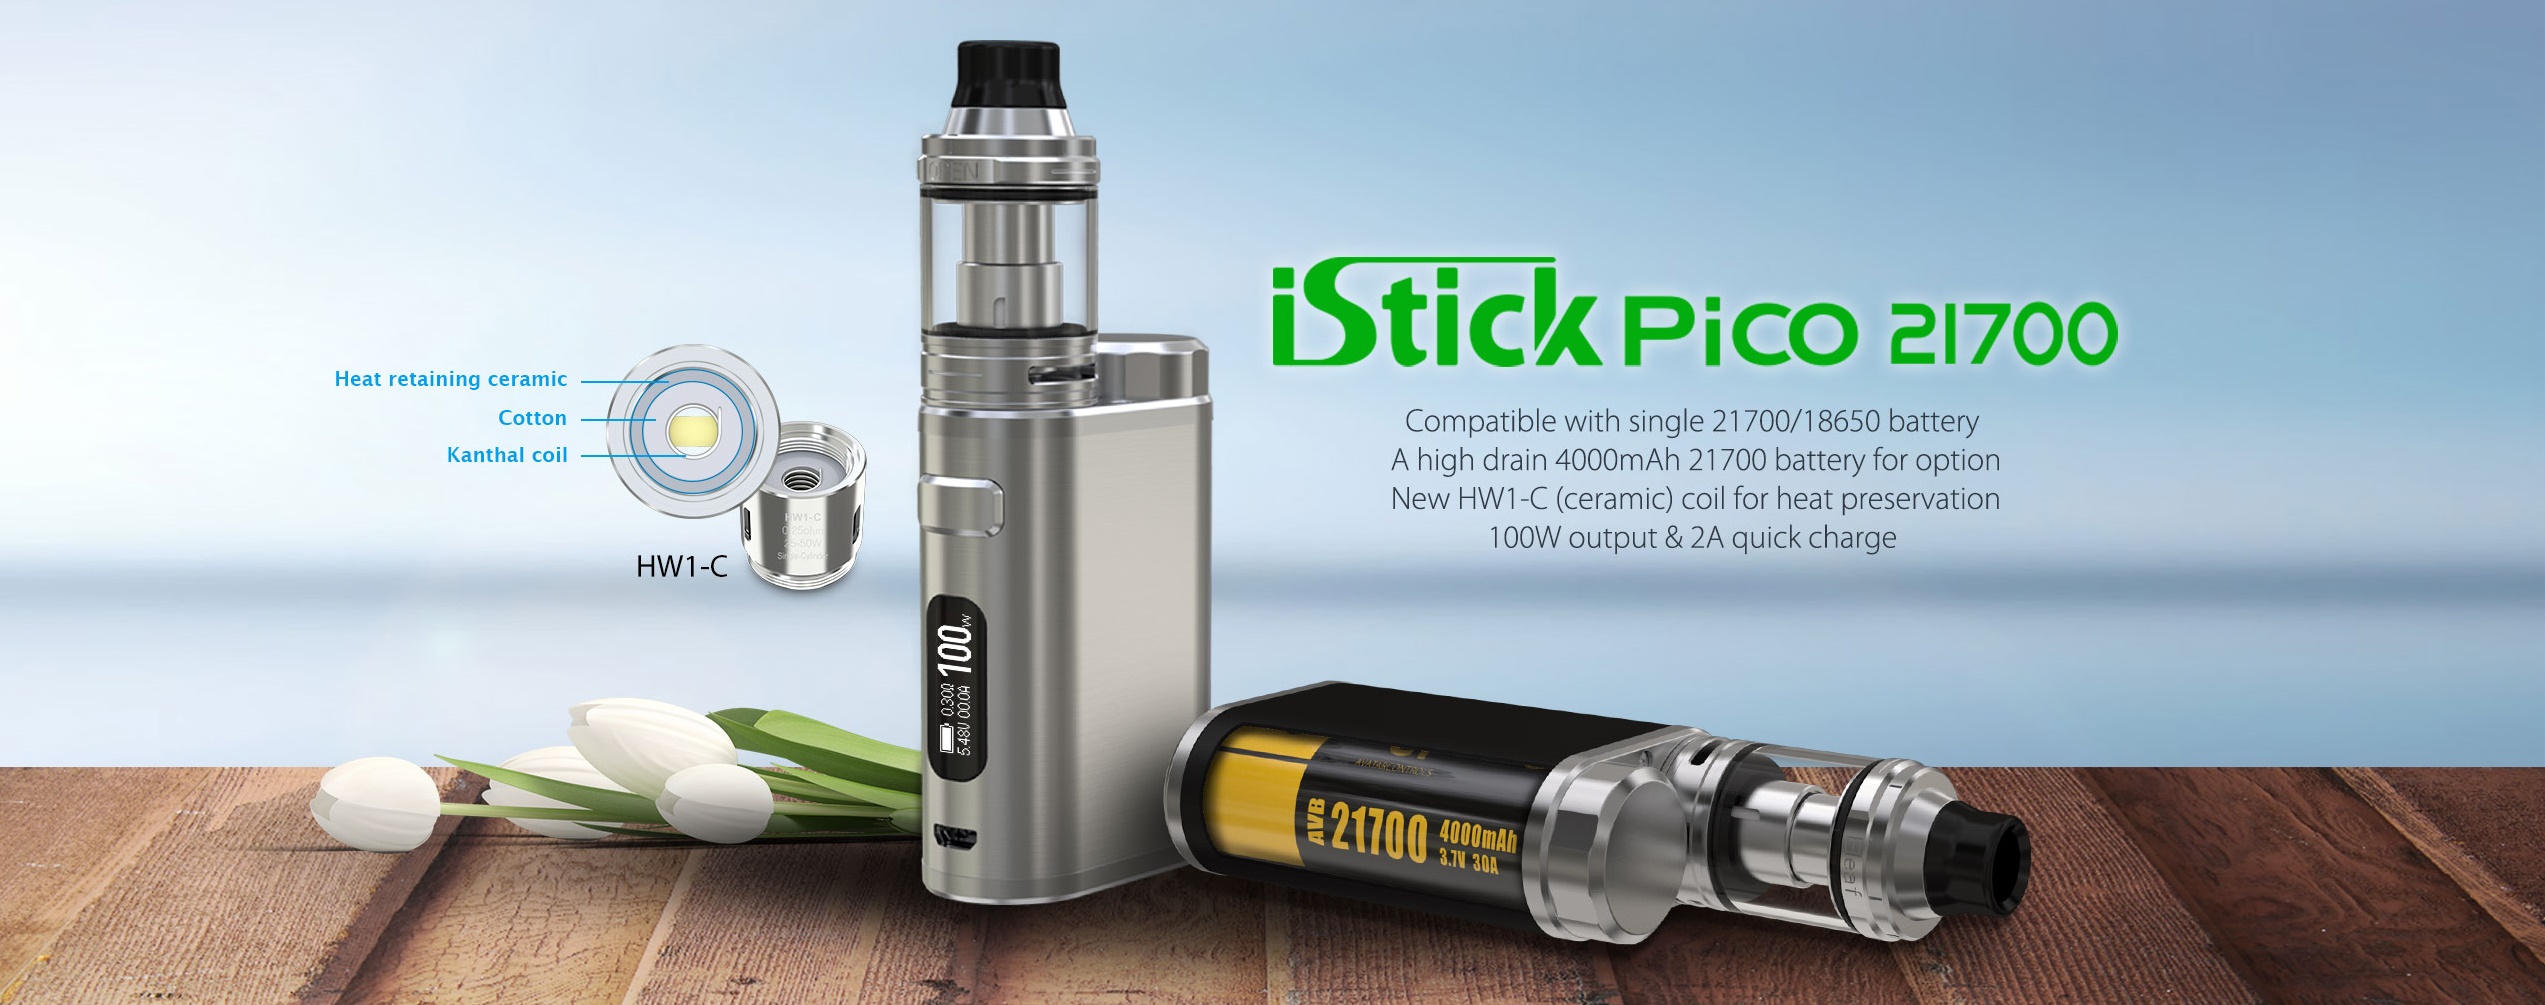 iStick-Pico-21700-full-kit-4000mah-elektronicka-cigareta